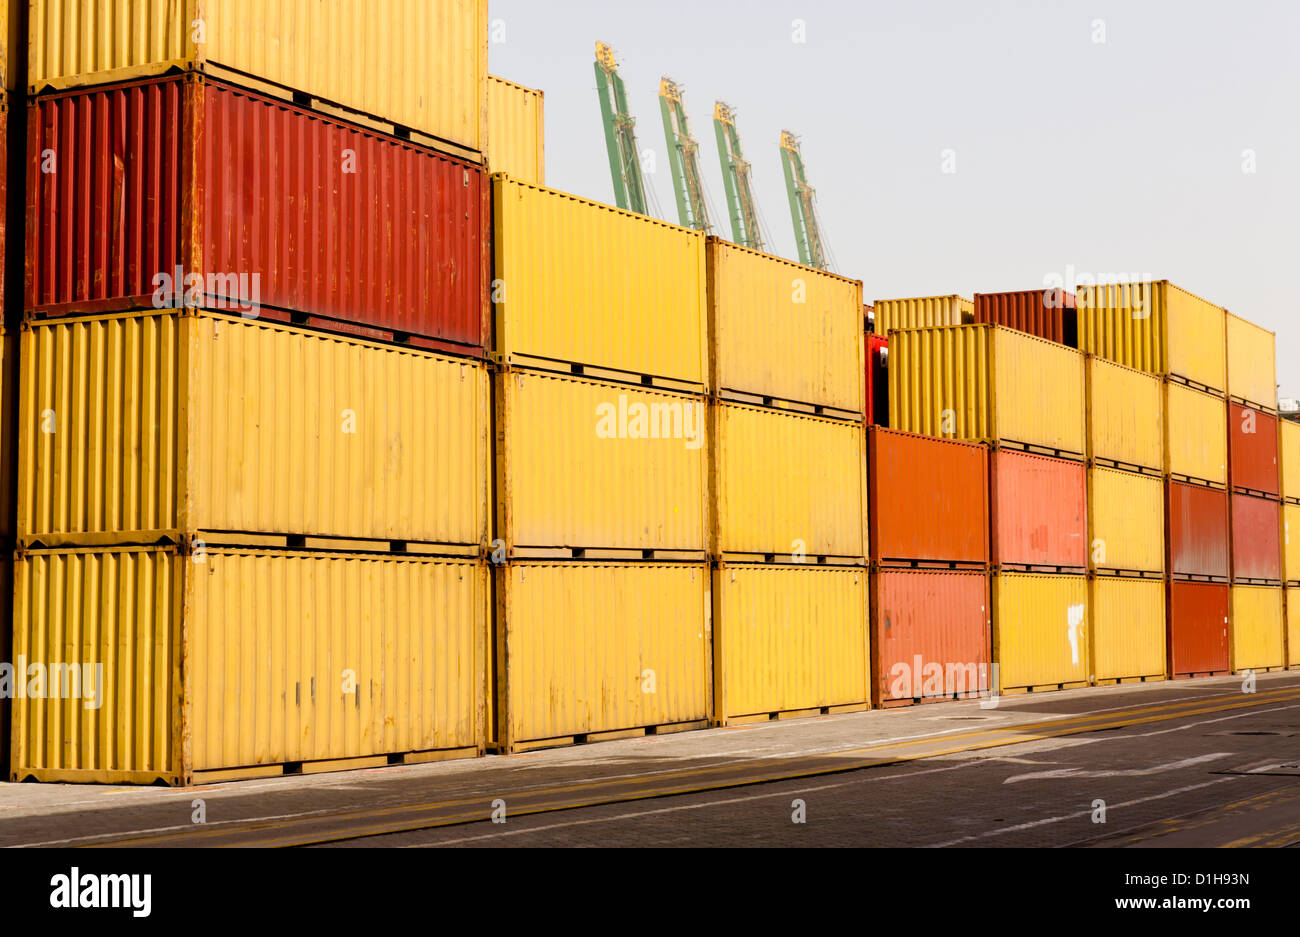 Cargo container harbor Stock Photo